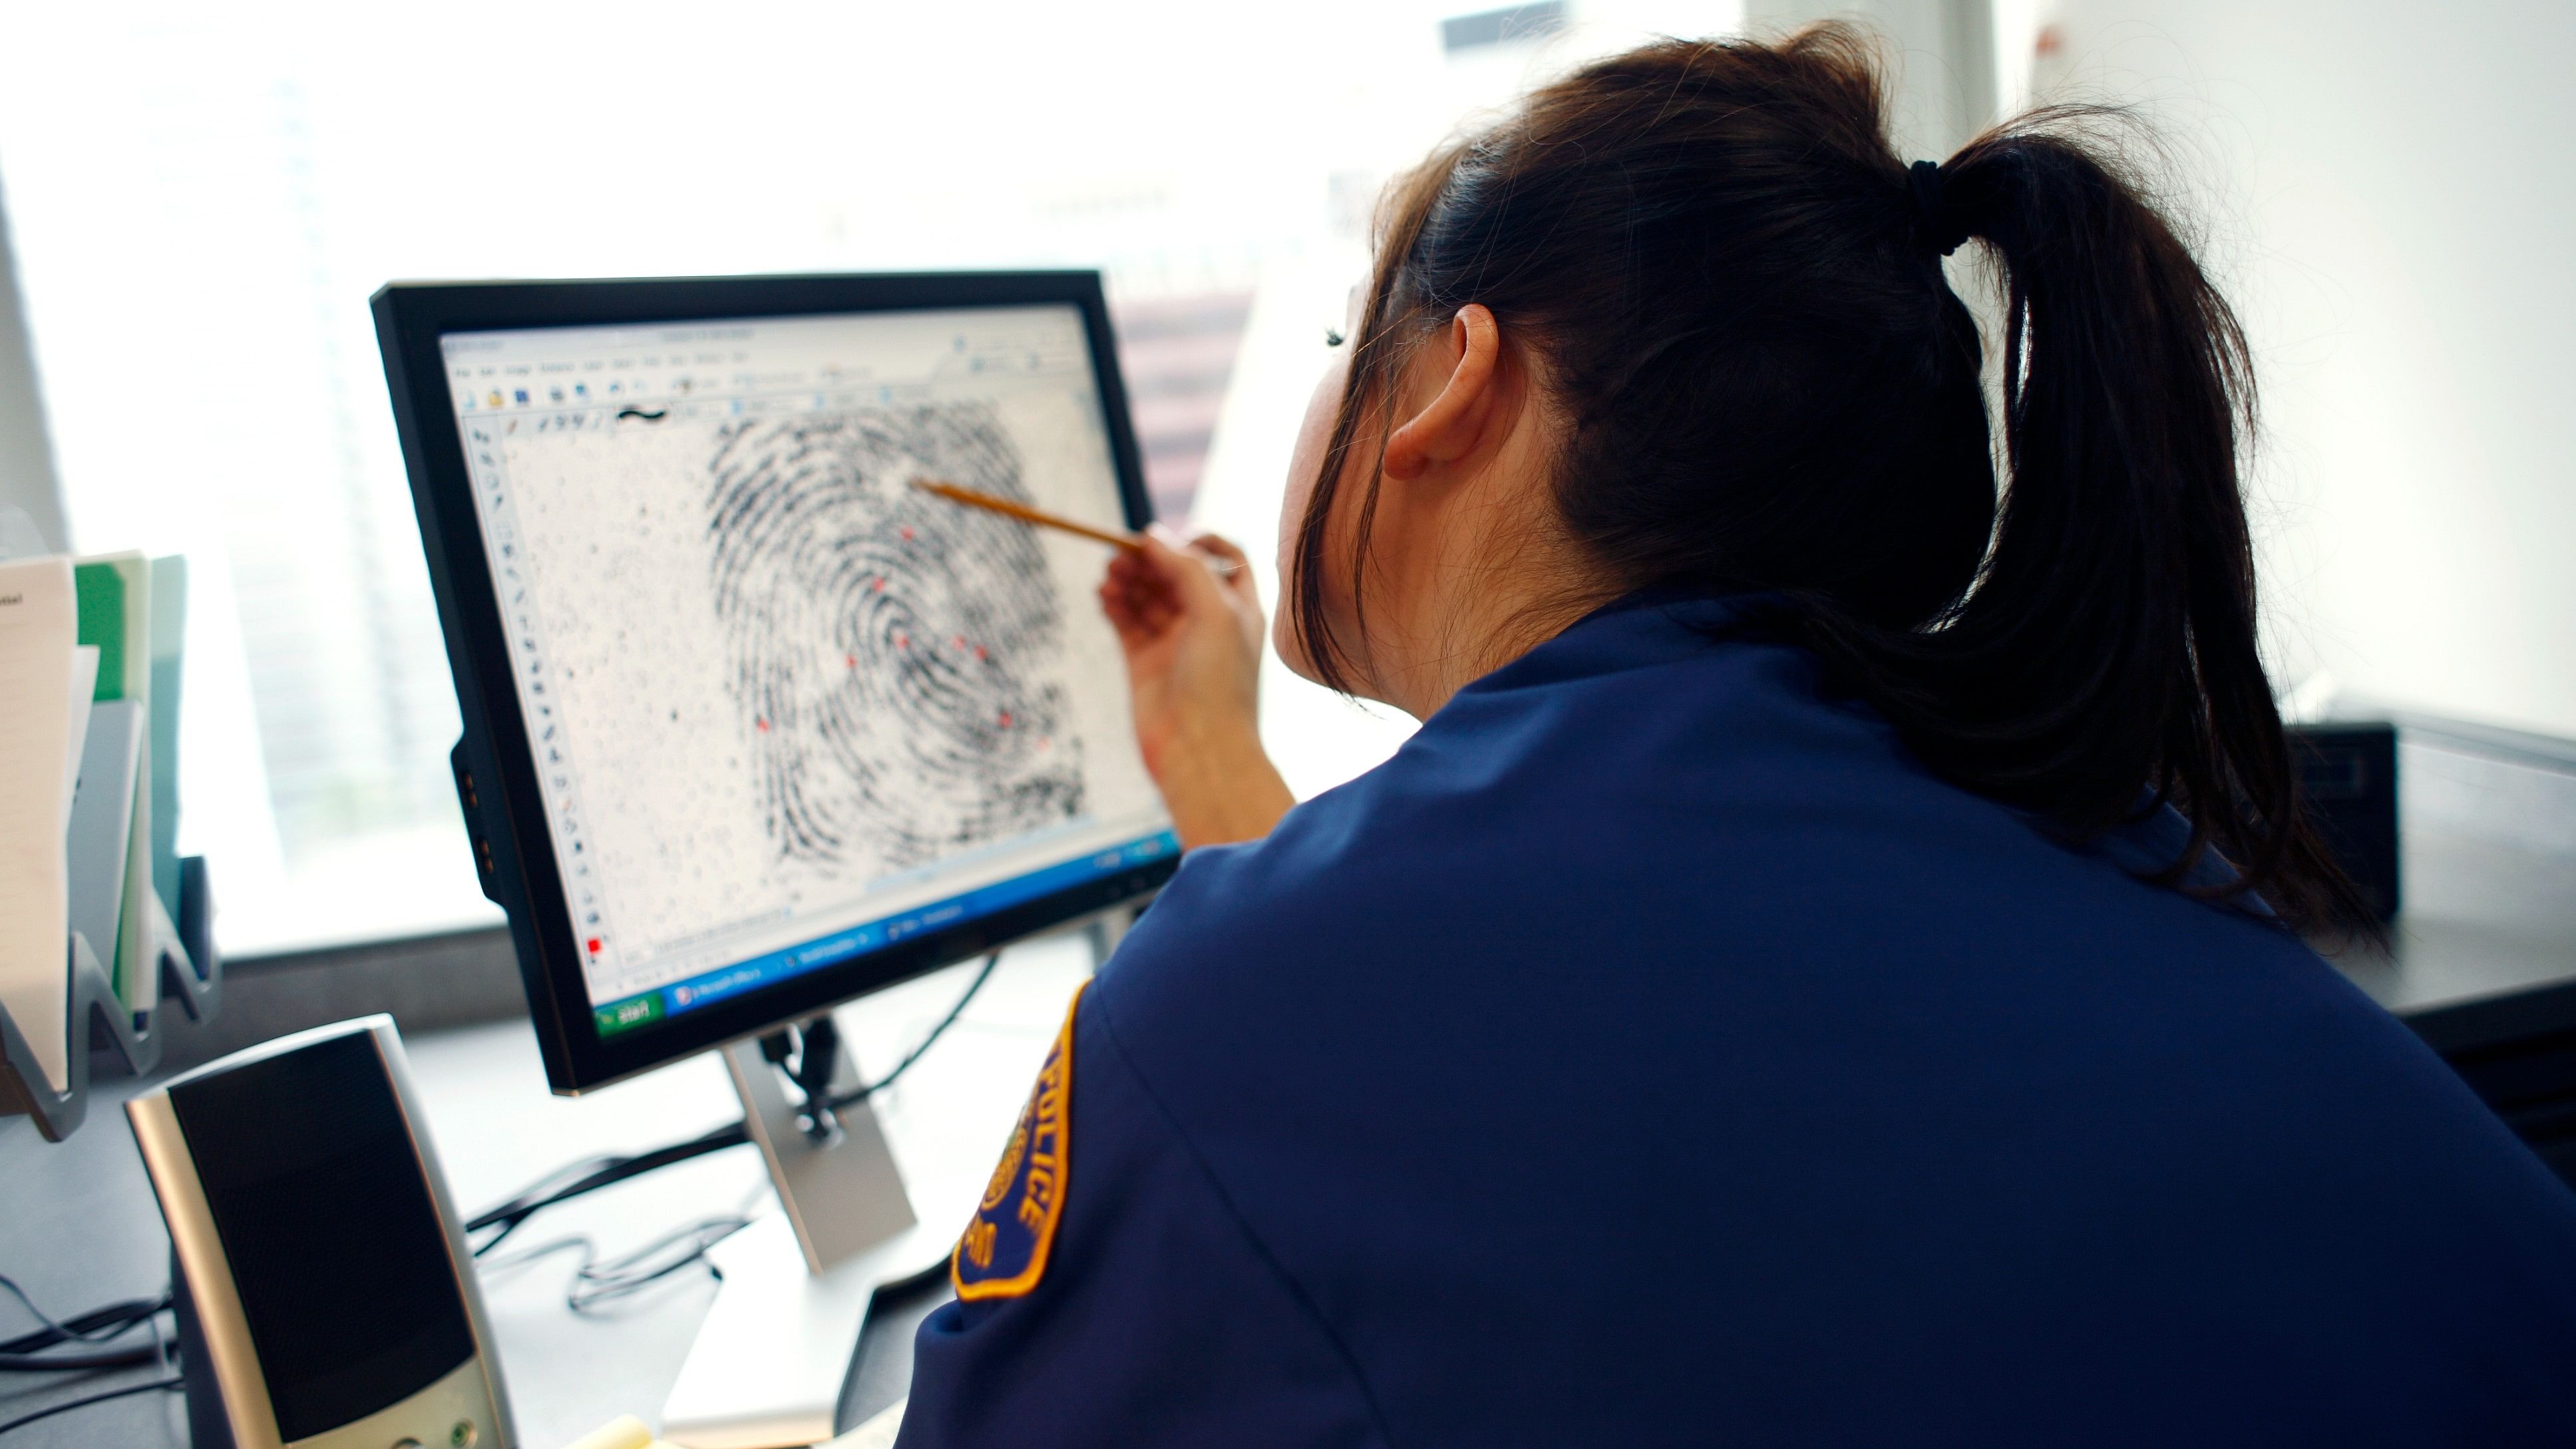 <div class="paragraphs"><p>A young officer viewing a fingerprint on a computer.</p><p></p></div>